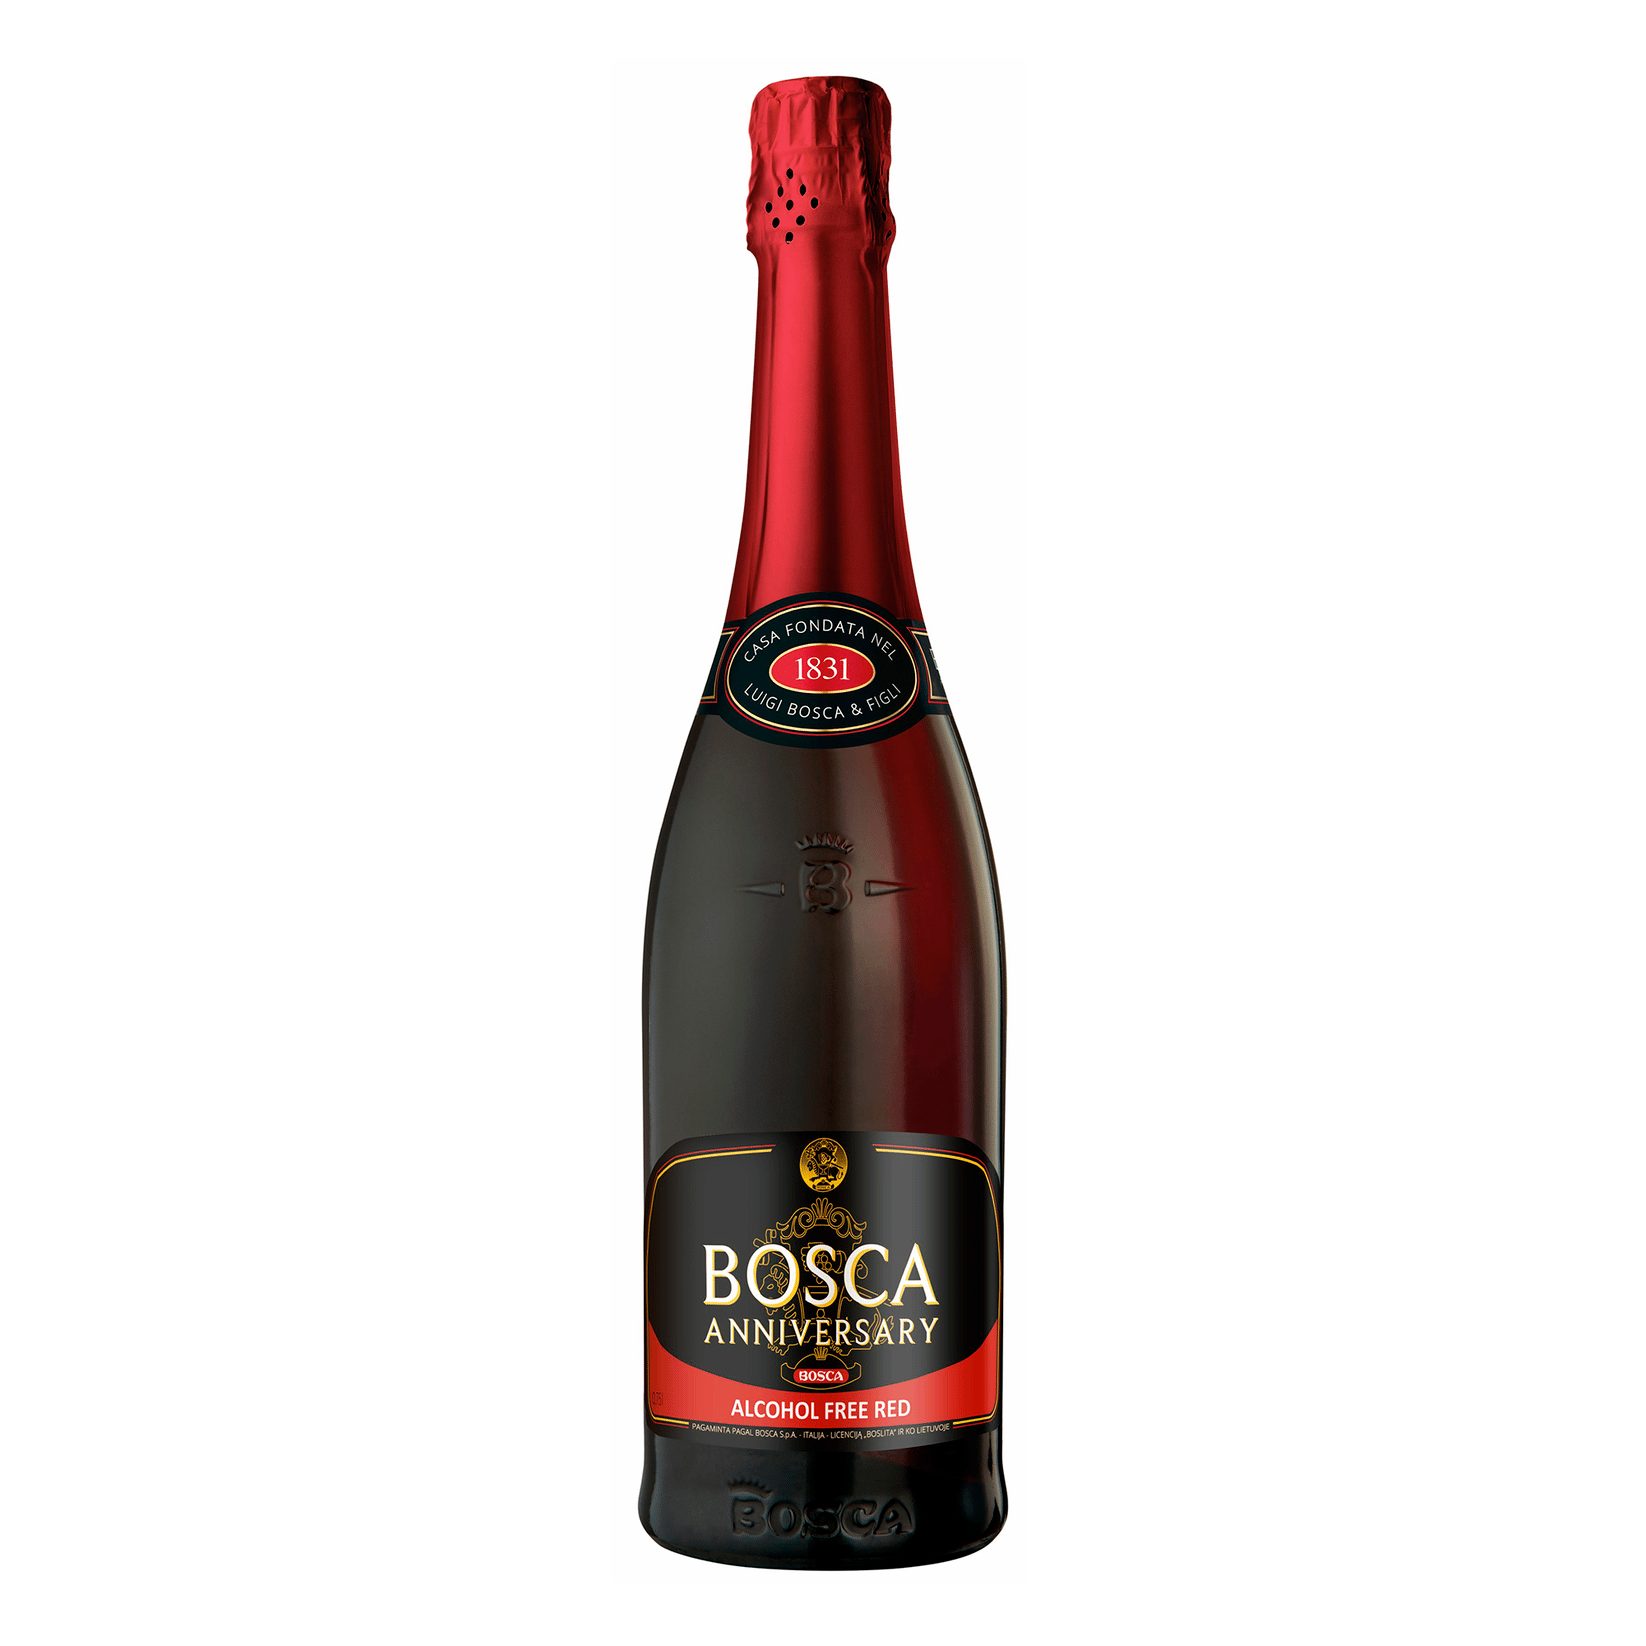 Красно белое боско цена. Вино игристое Bosca Anniversary. Красное игристое вино Боско. Bosca красное вино игристое. Боско красное вино игристое сладкое.